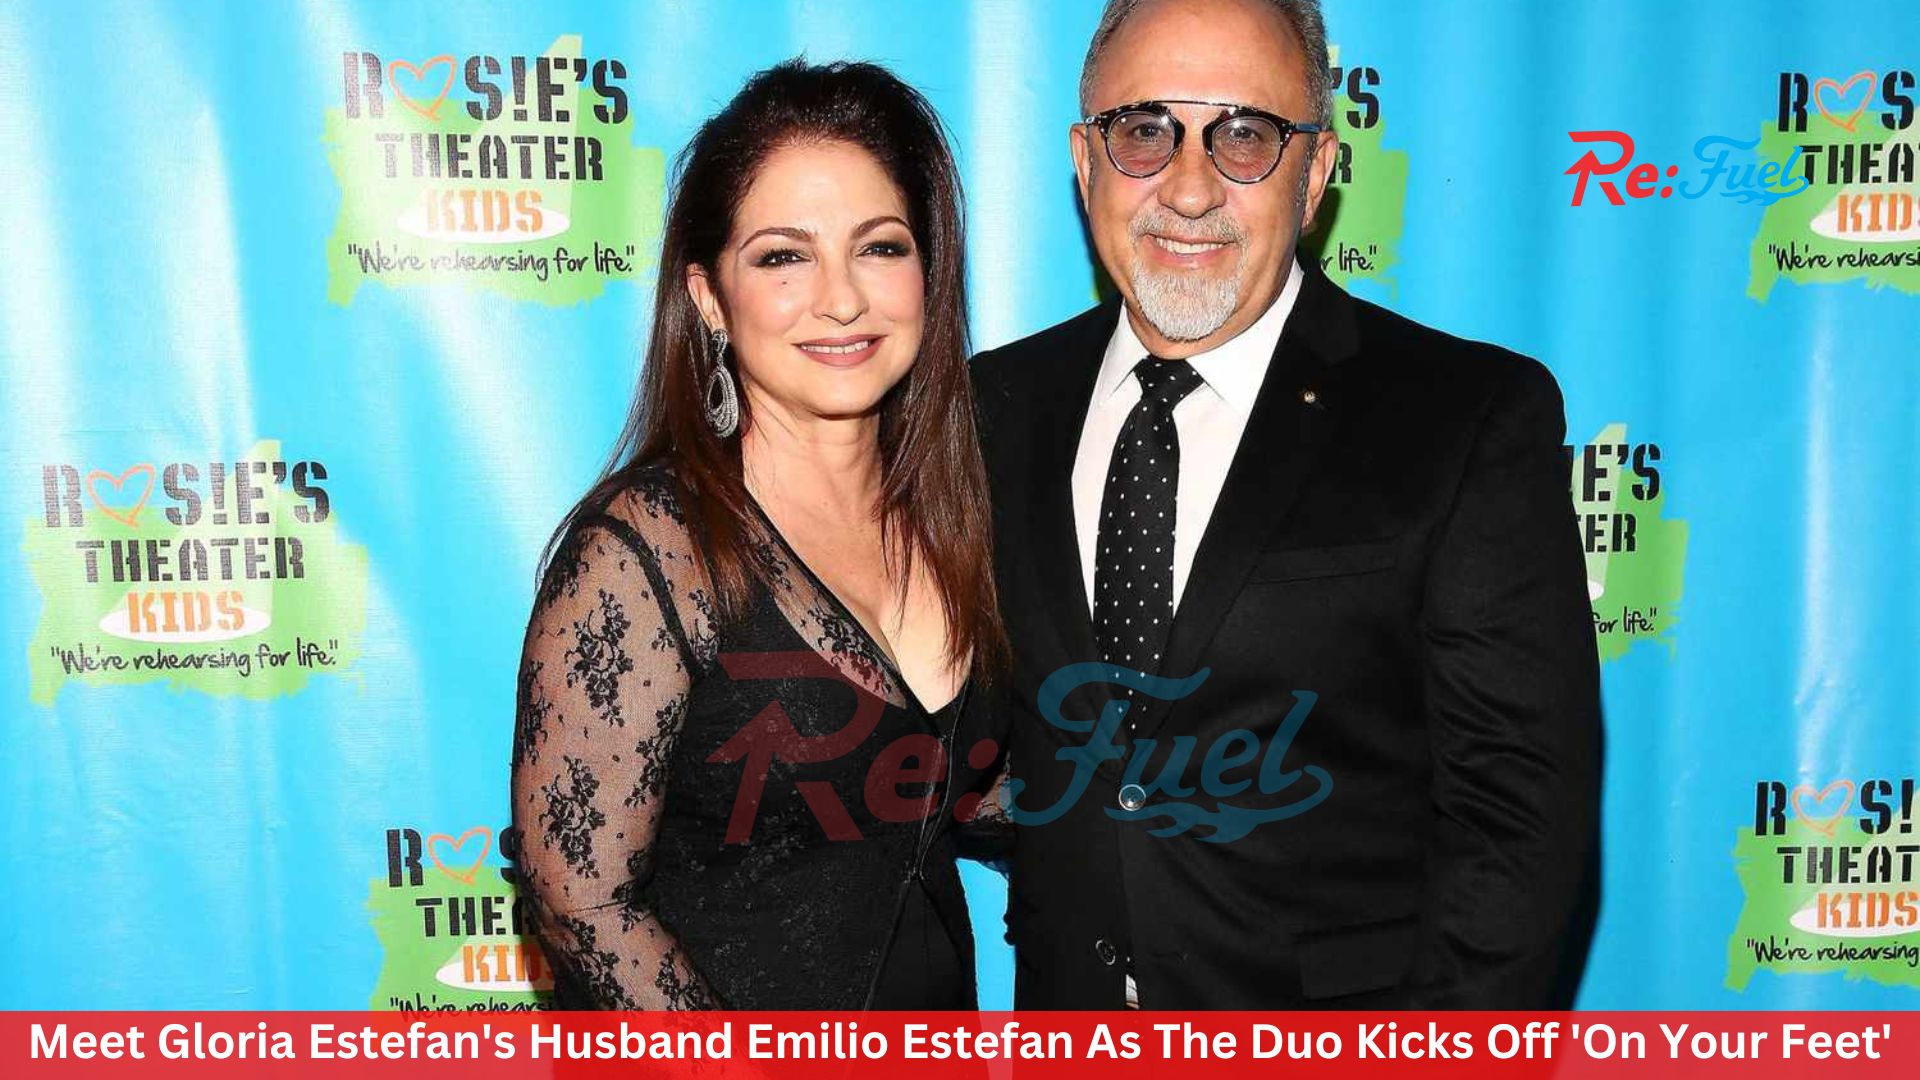 Meet Gloria Estefan's Husband Emilio Estefan As The Duo Kicks Off 'On Your Feet'